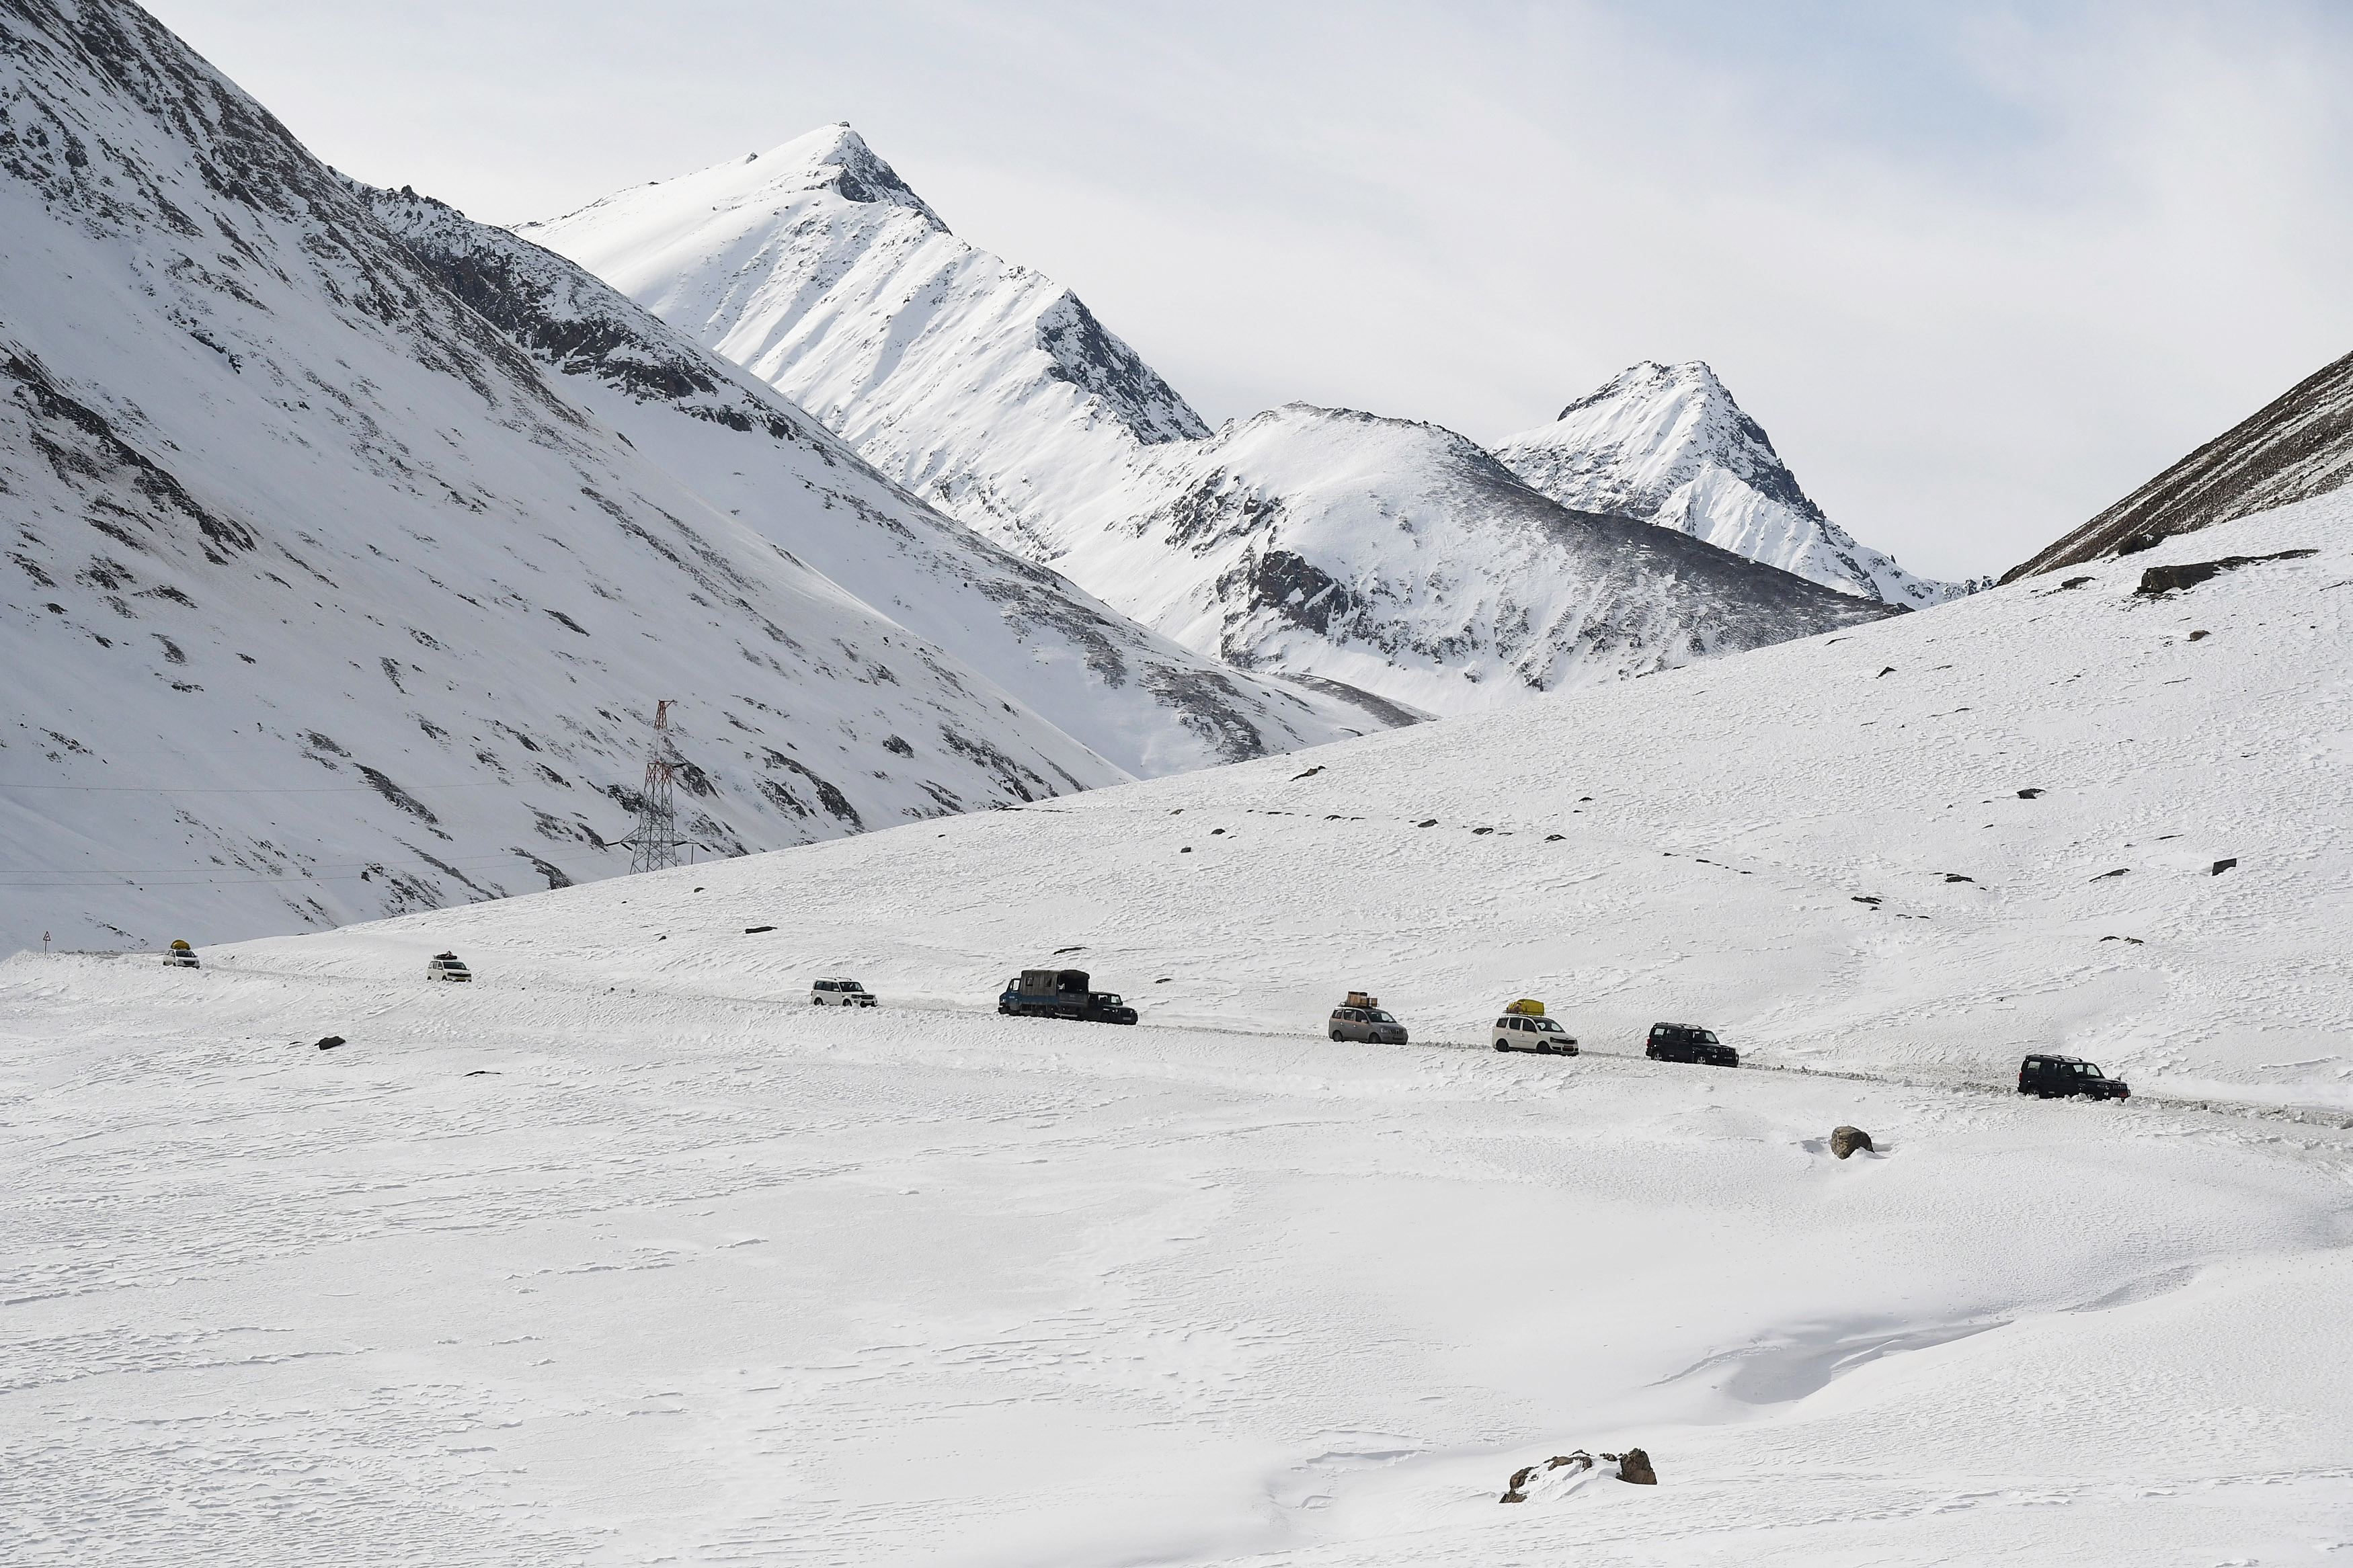 Vehicles move through the snow-covered mountains on Srinagar-Leh Highway at Zojila Pass